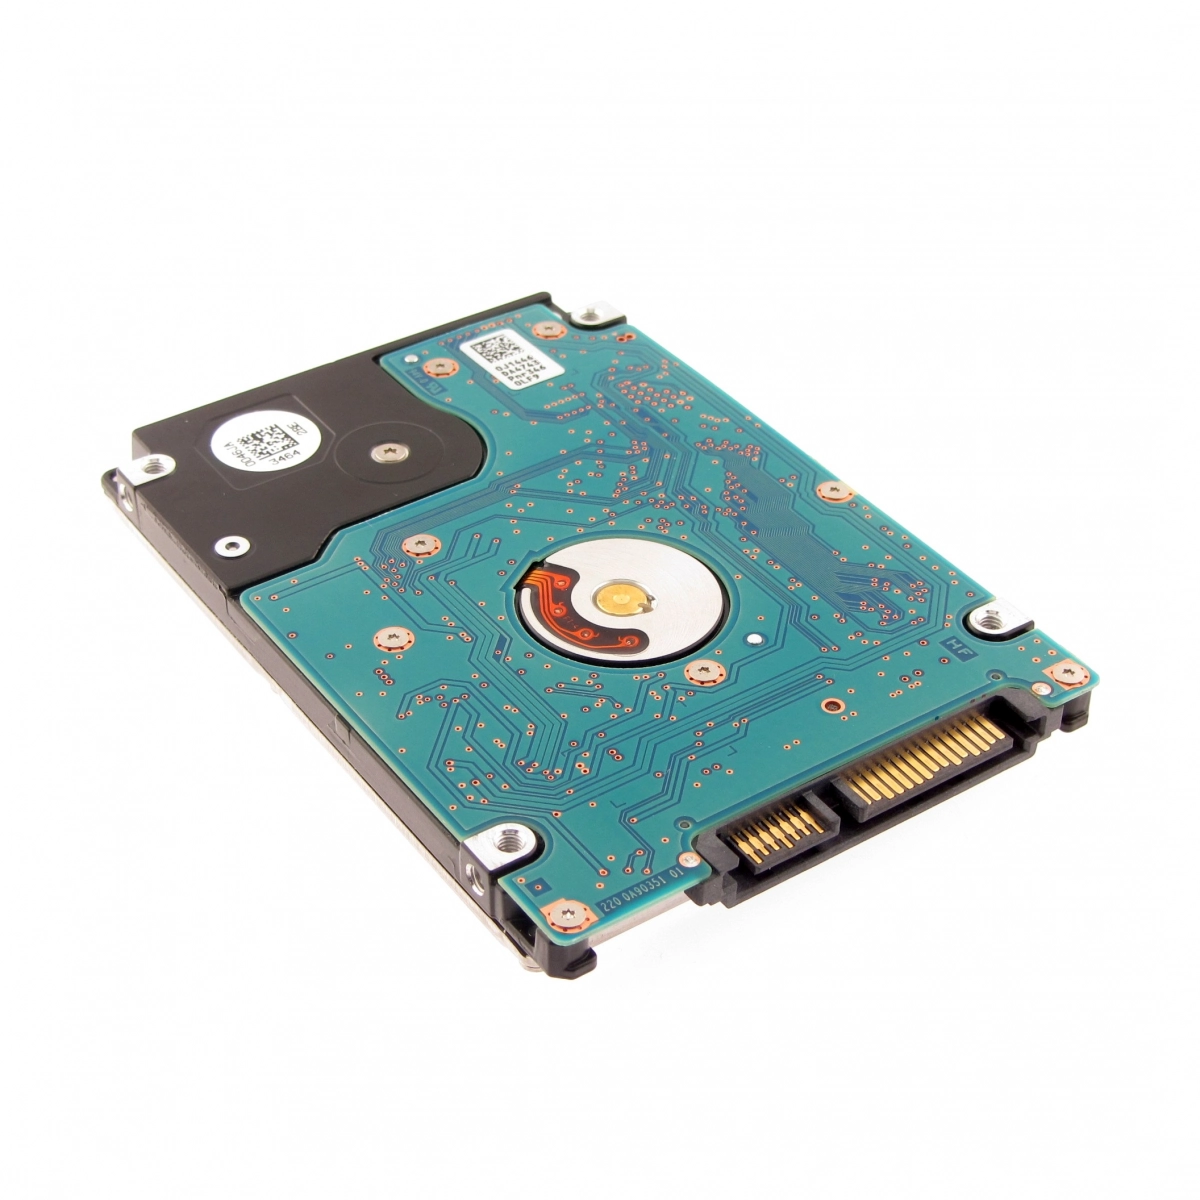 Notebook-Festplatte 1TB, 7mm, 7200rpm, 128MB für ASUS A93S